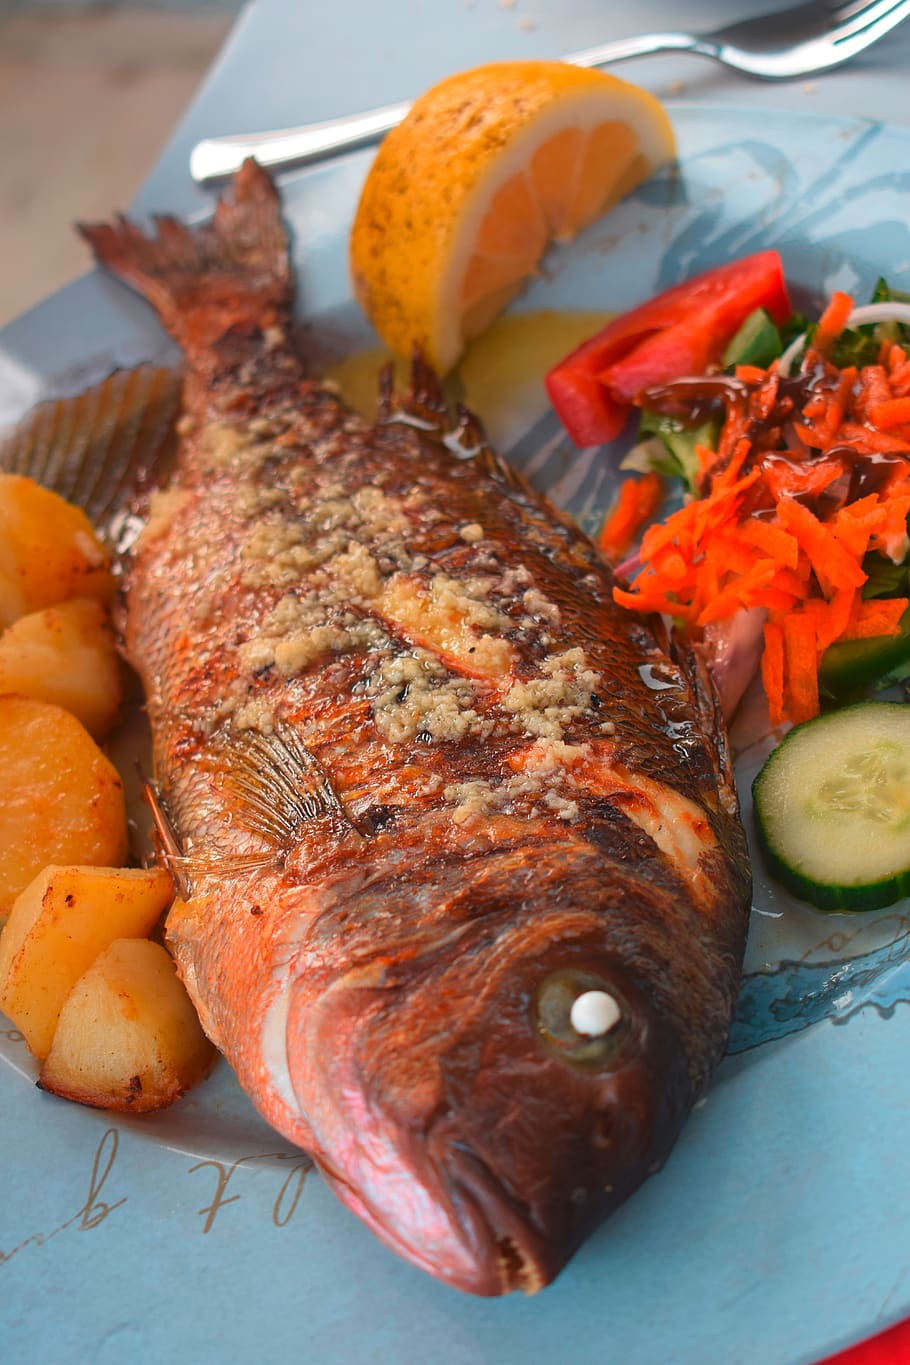 ikan, ikan air tawar, makan, makanan, sehat, lapangan, lezat, hidangan utama, panggang, doraden